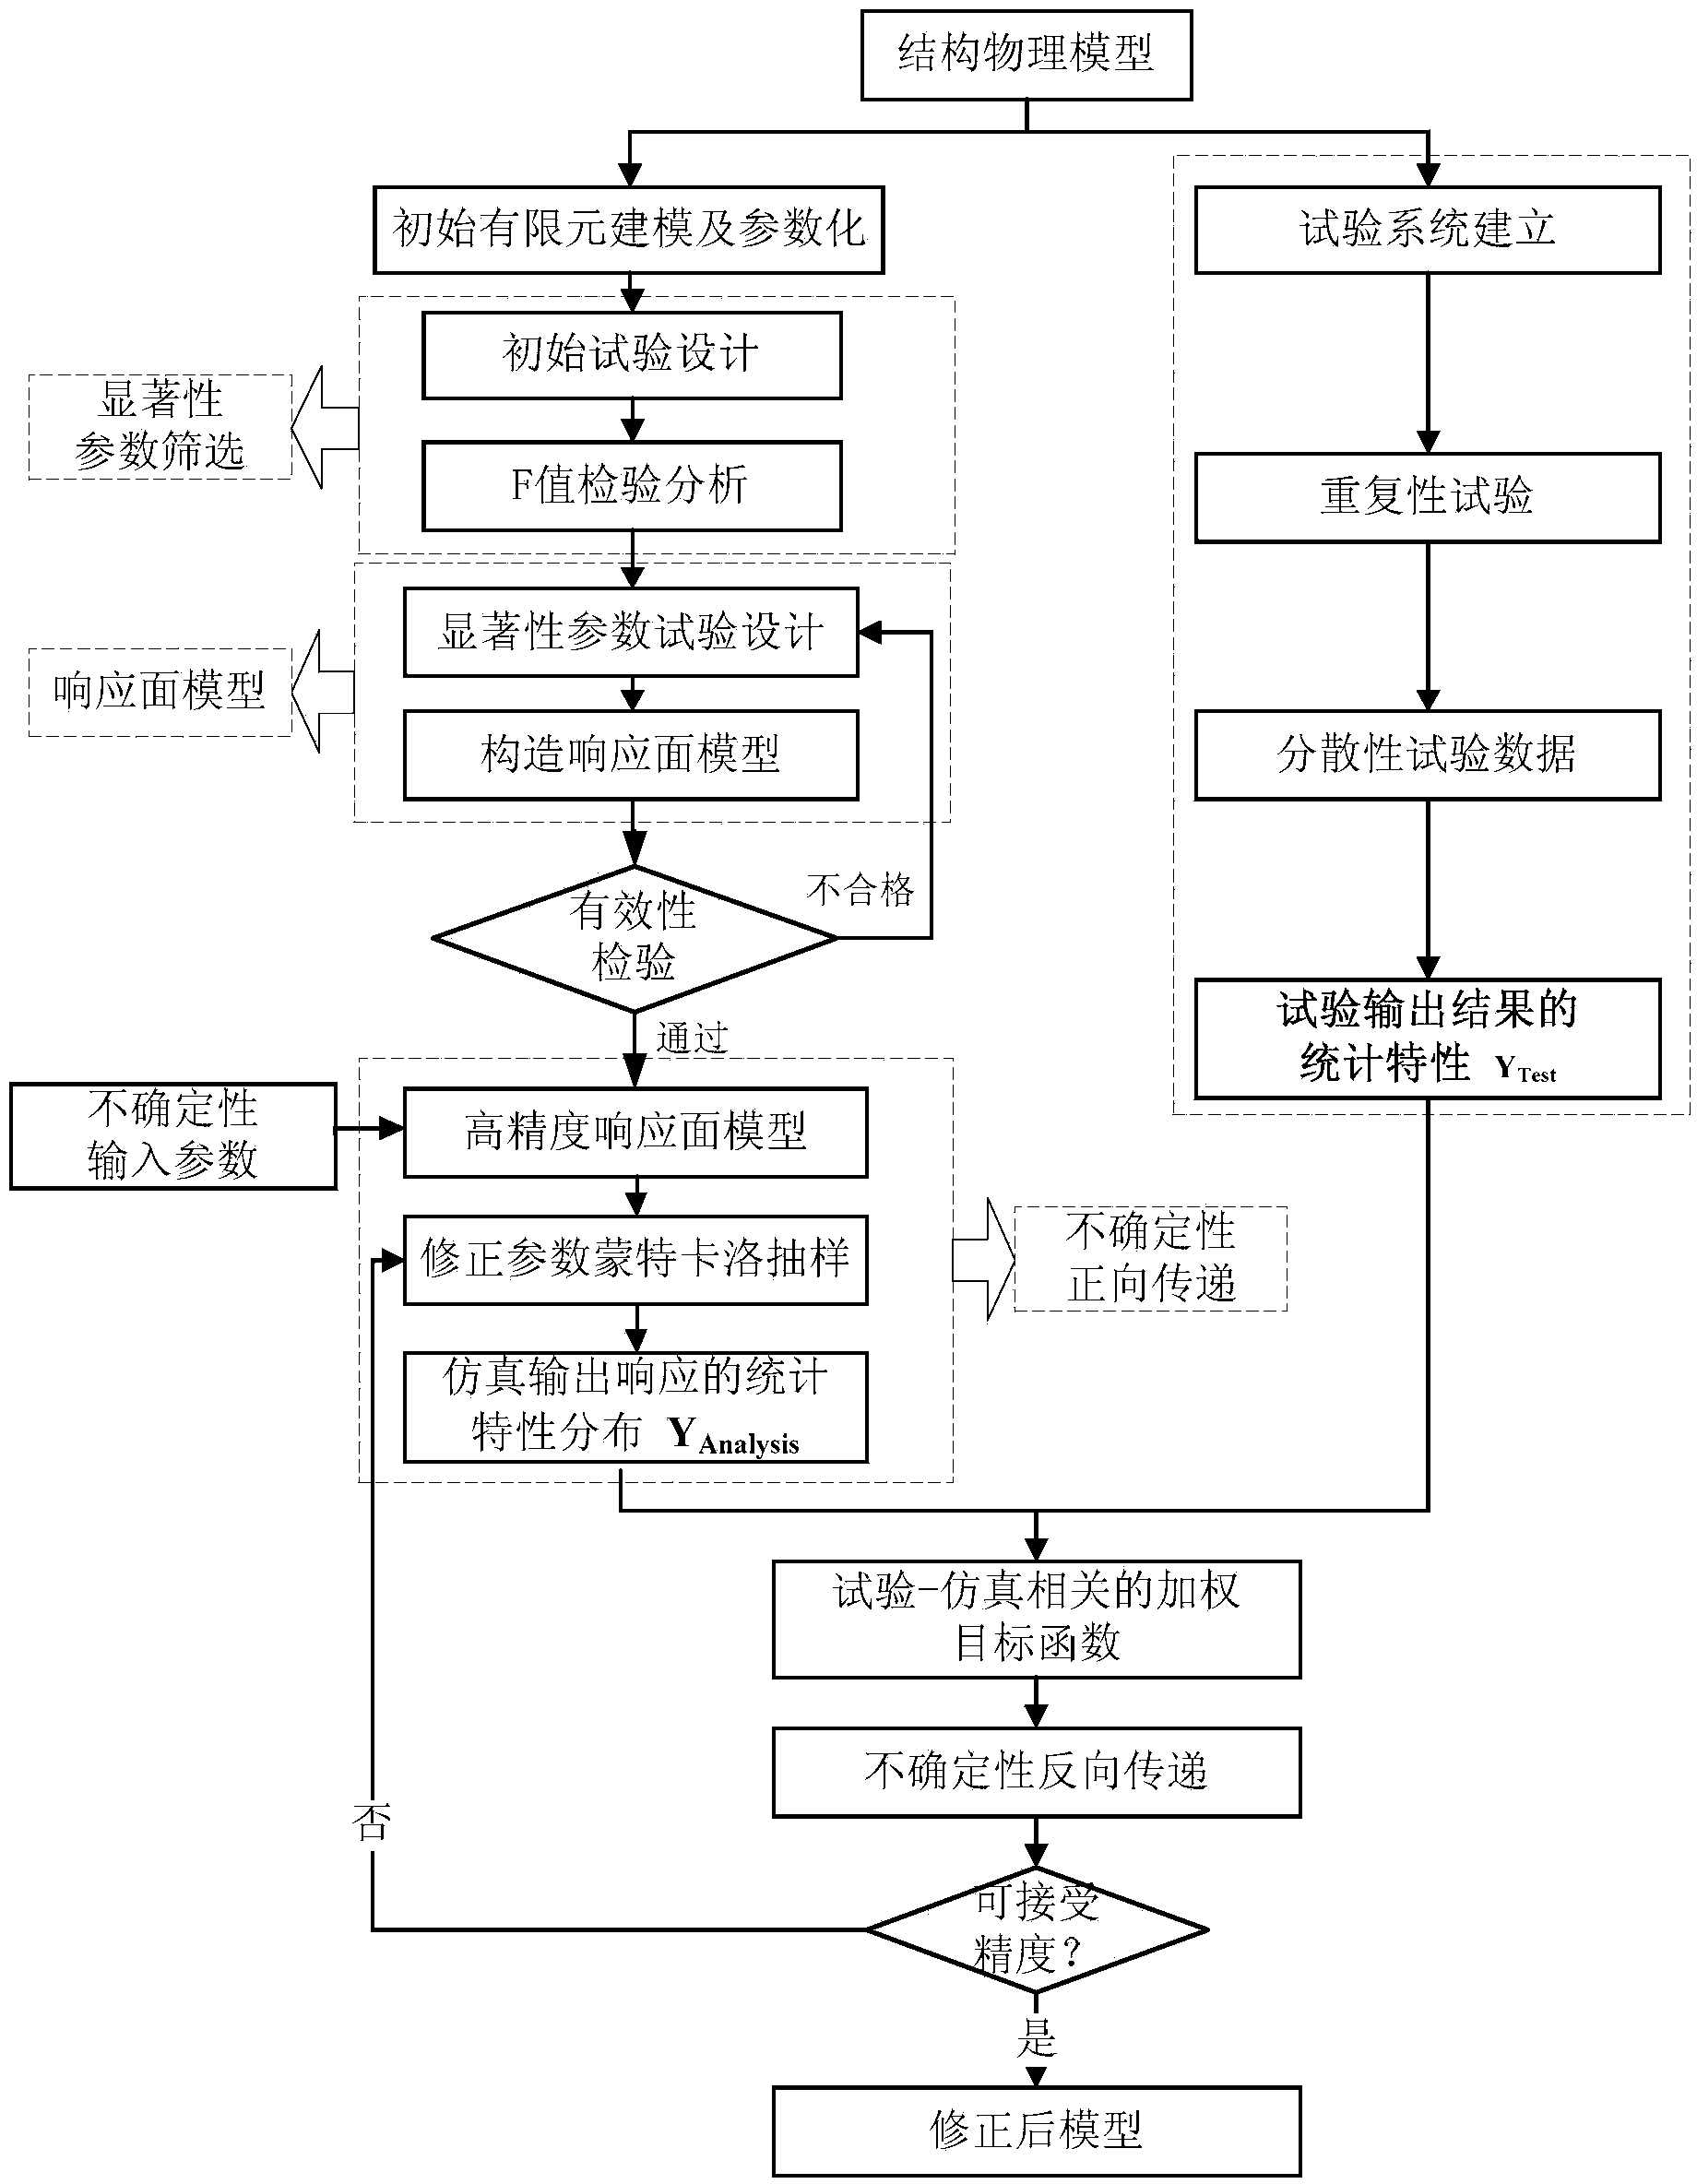 Structure finite element model correcting method based on multi-element uncertainty